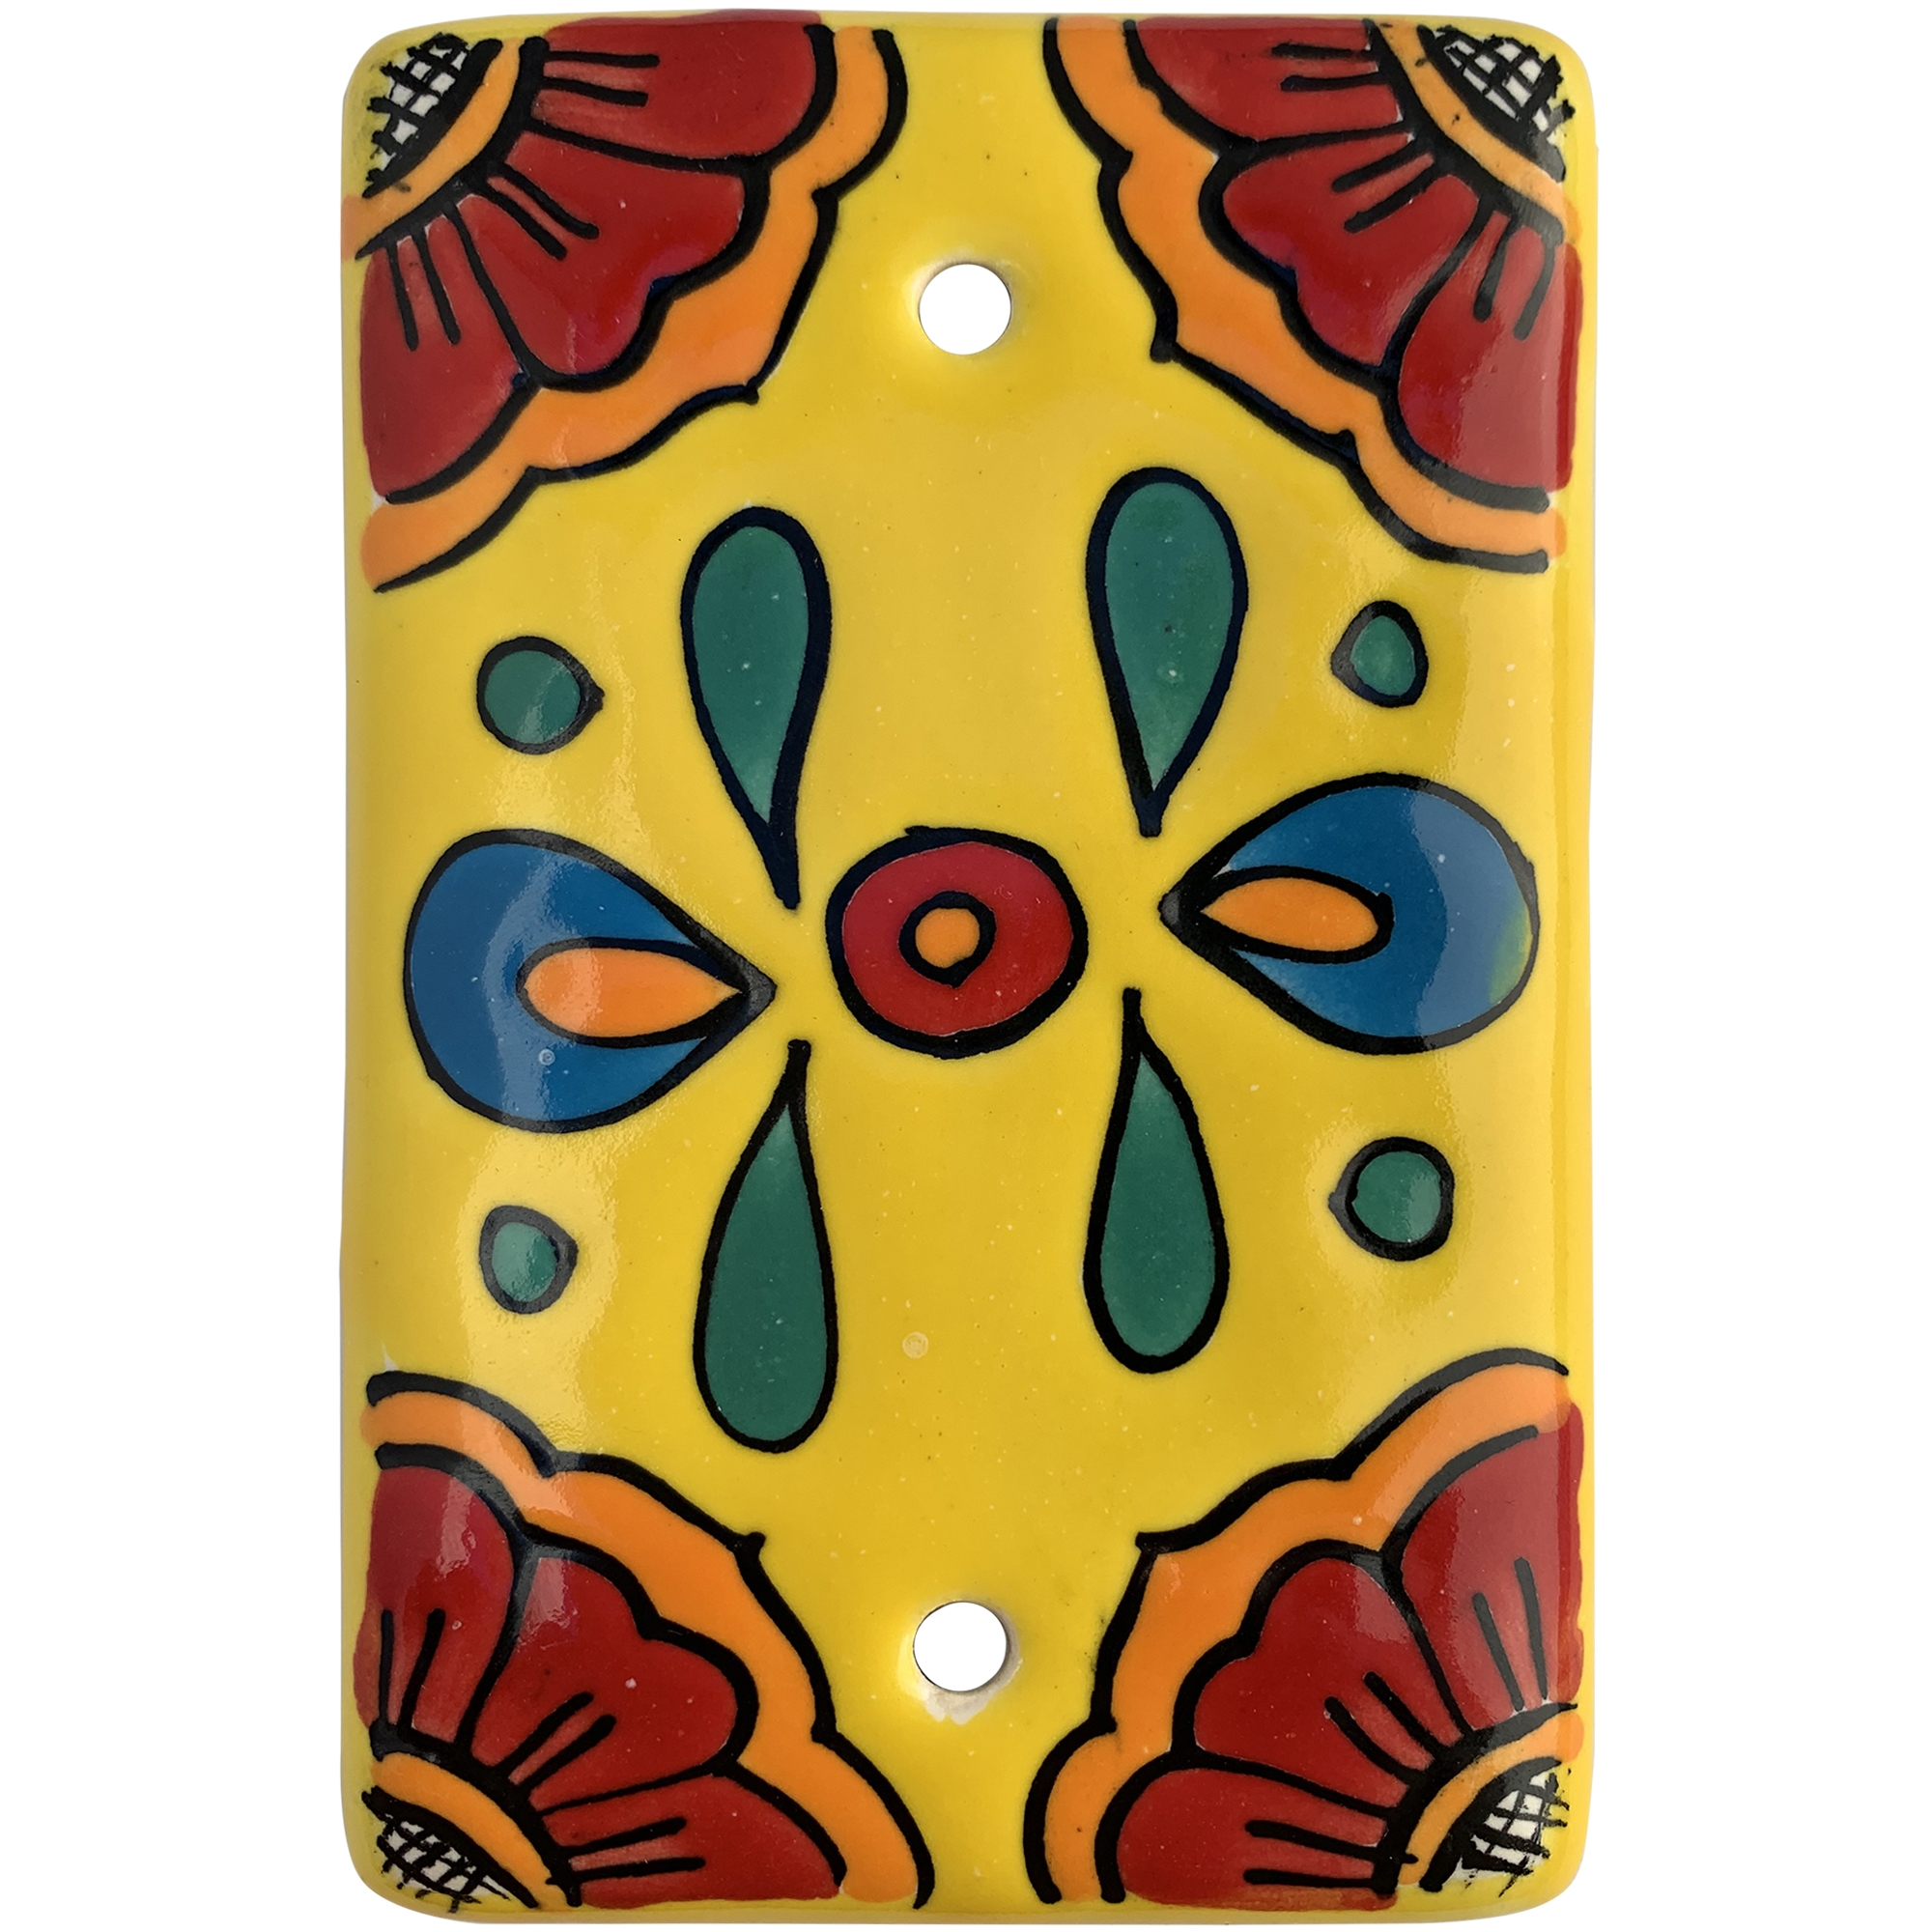 TalaMex Canary Cover Mexican Talavera Ceramic Switch Plate